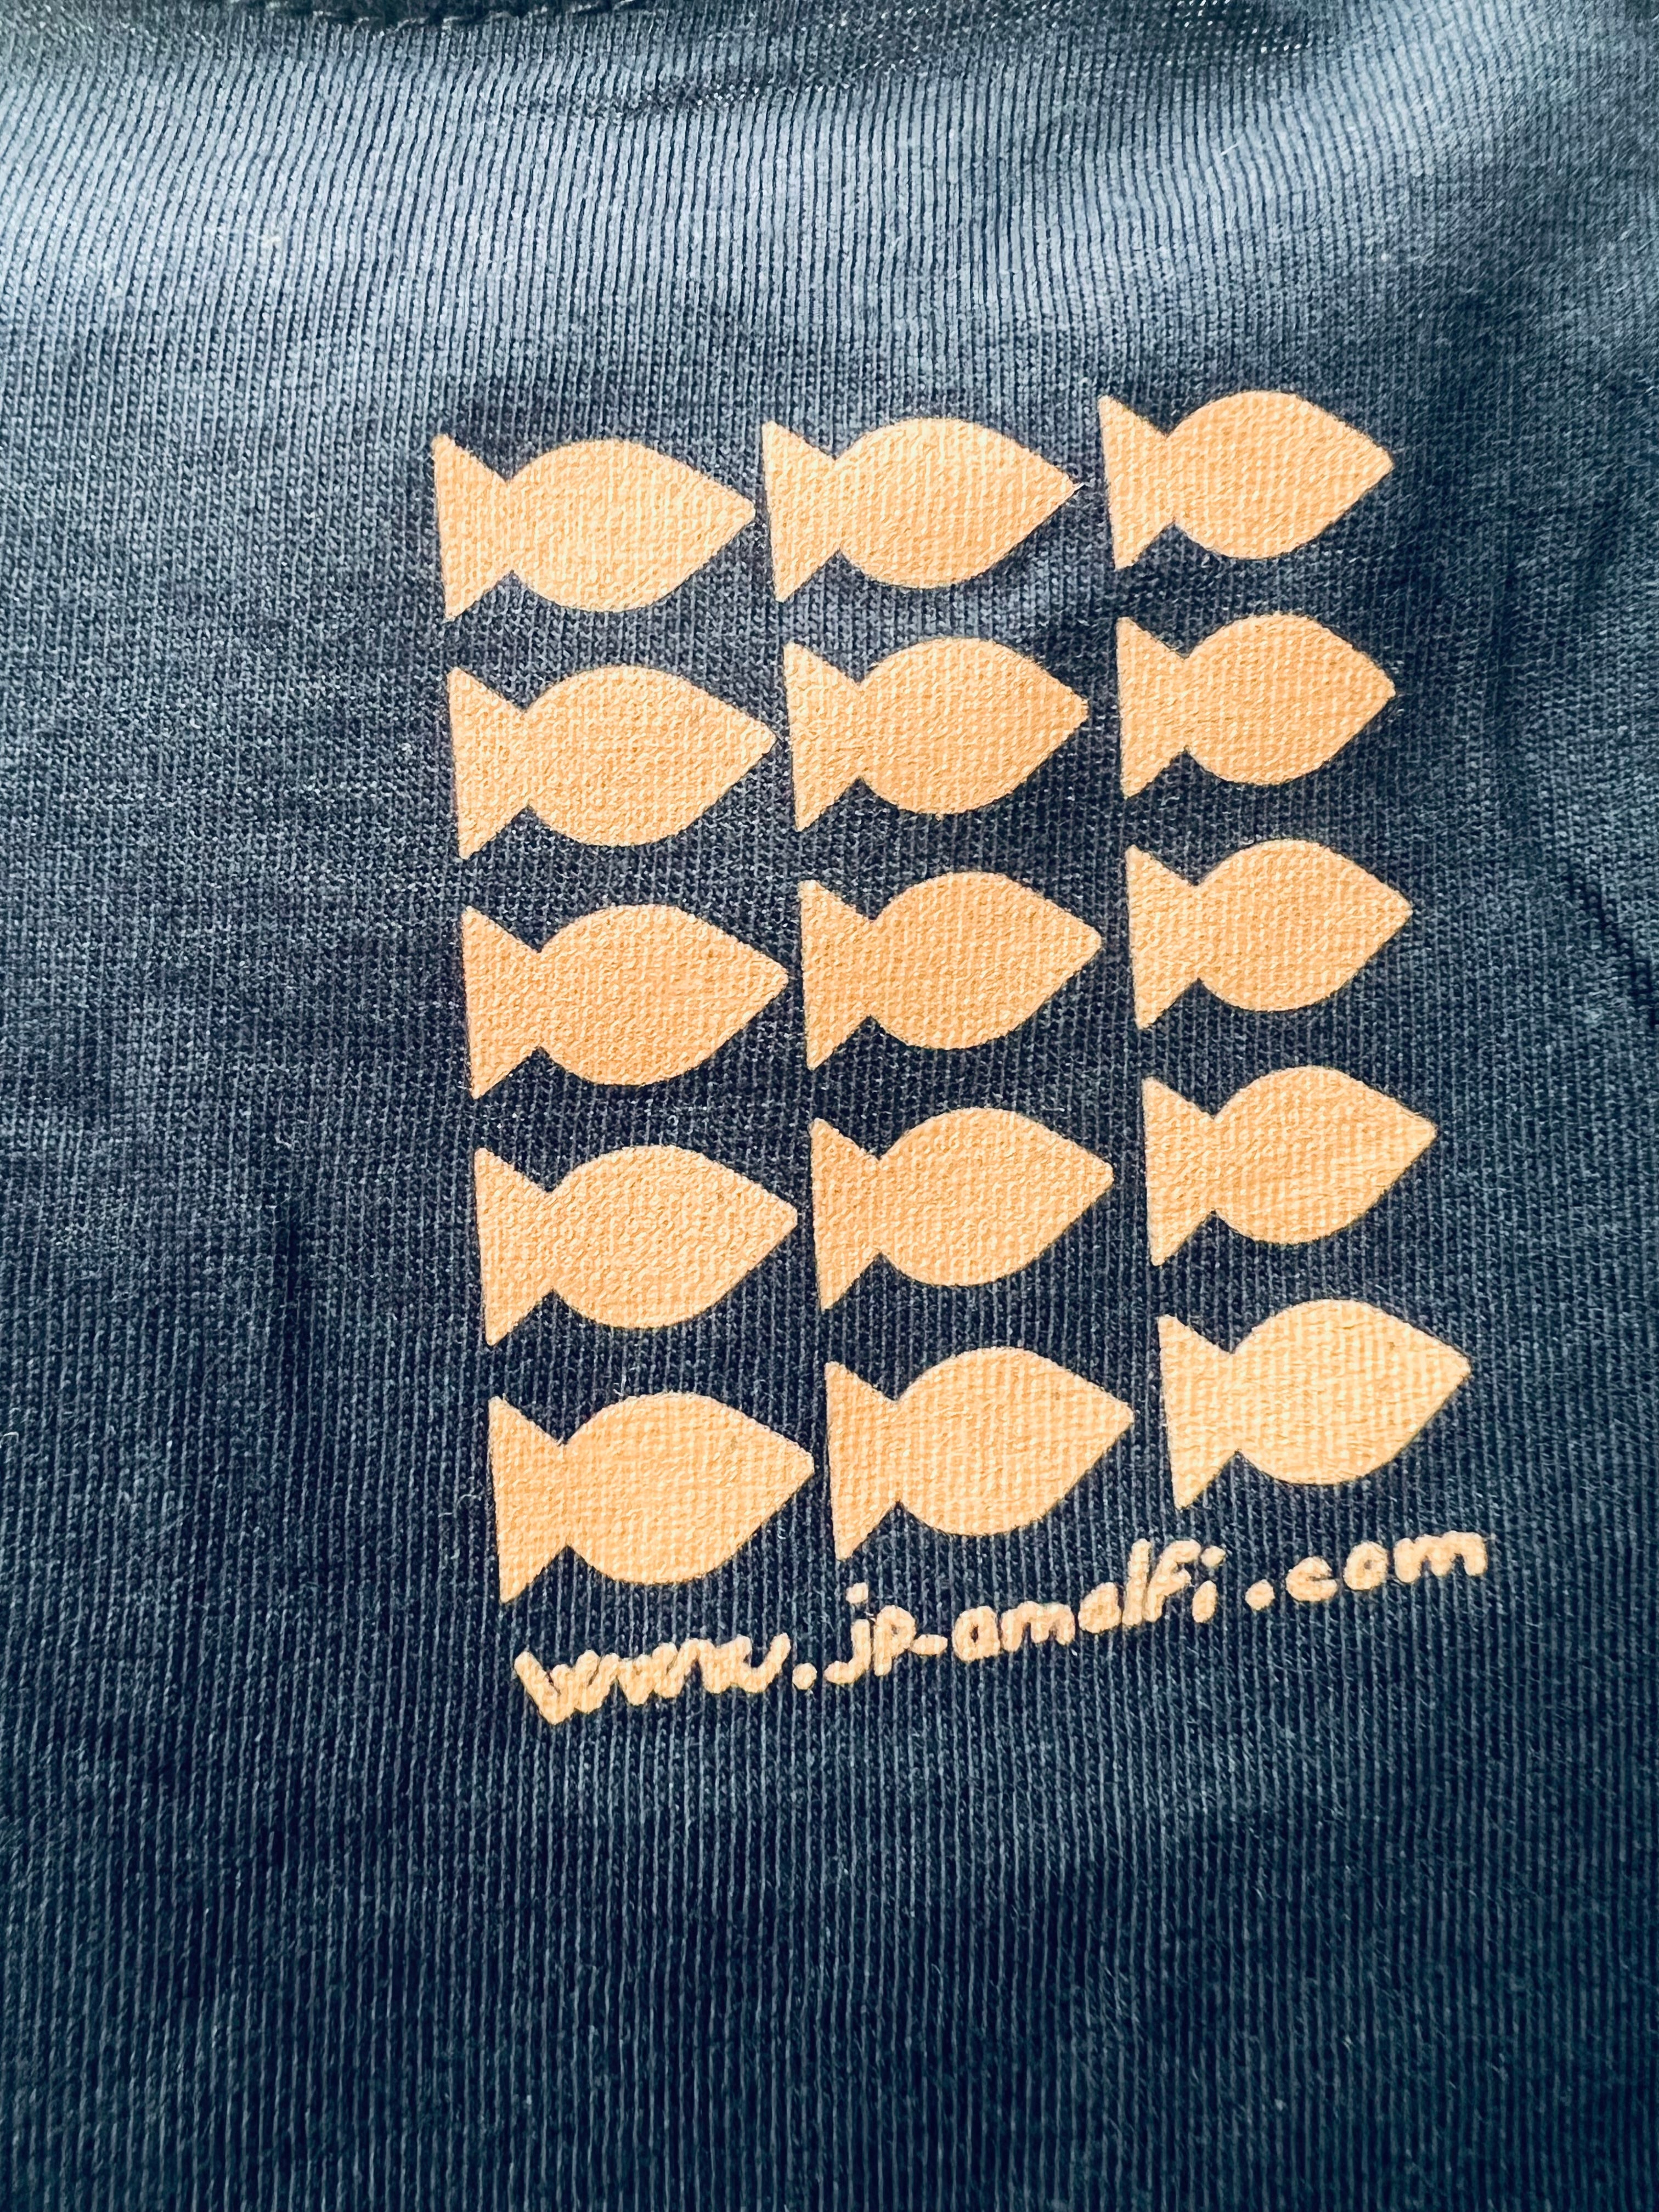 Glitter fish_ woman t-shirt - JP Amalfi